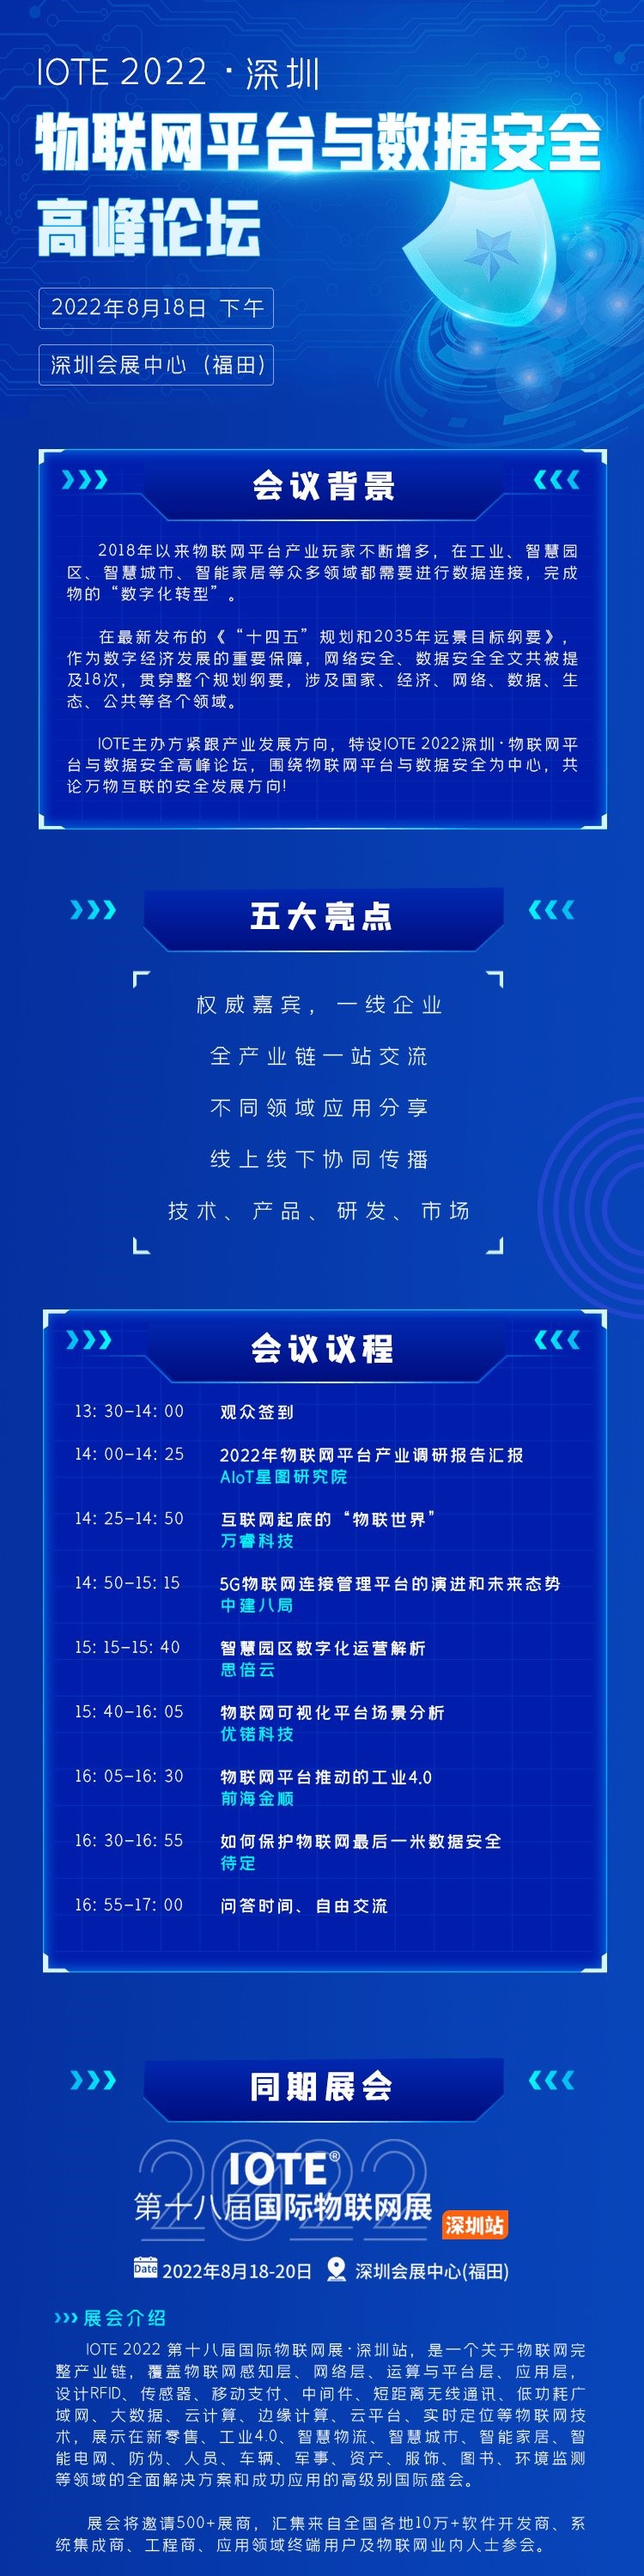 IOTE 2022深圳物联网平台与数据安全高峰论坛